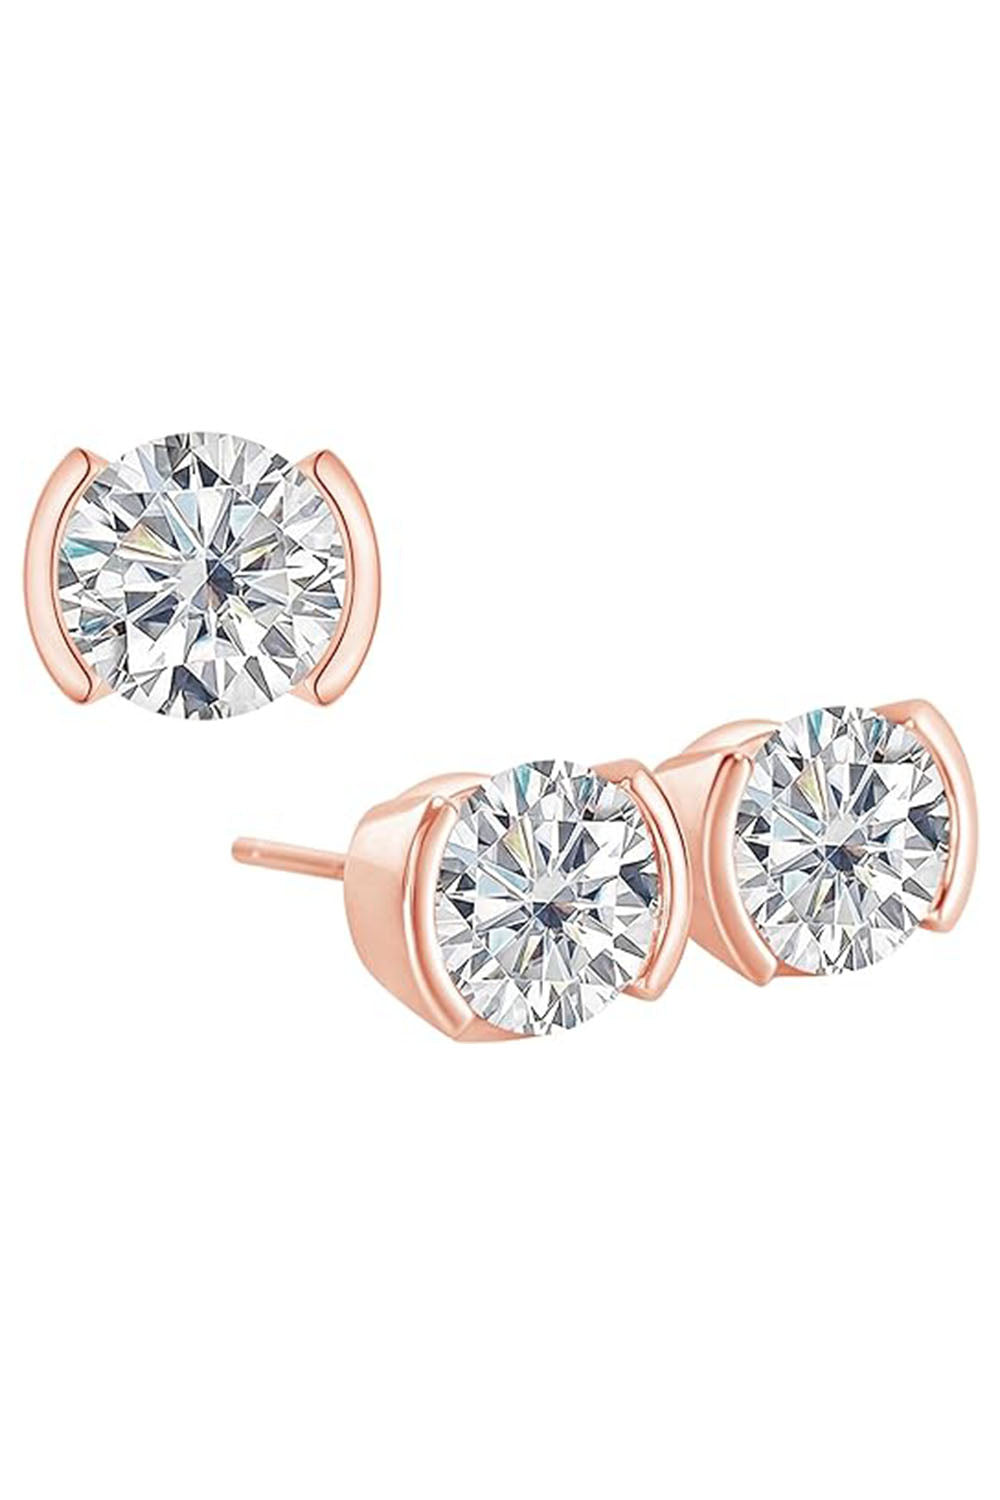 Rose Gold Color Moissanite Diamond Solitaire Stud Earrings